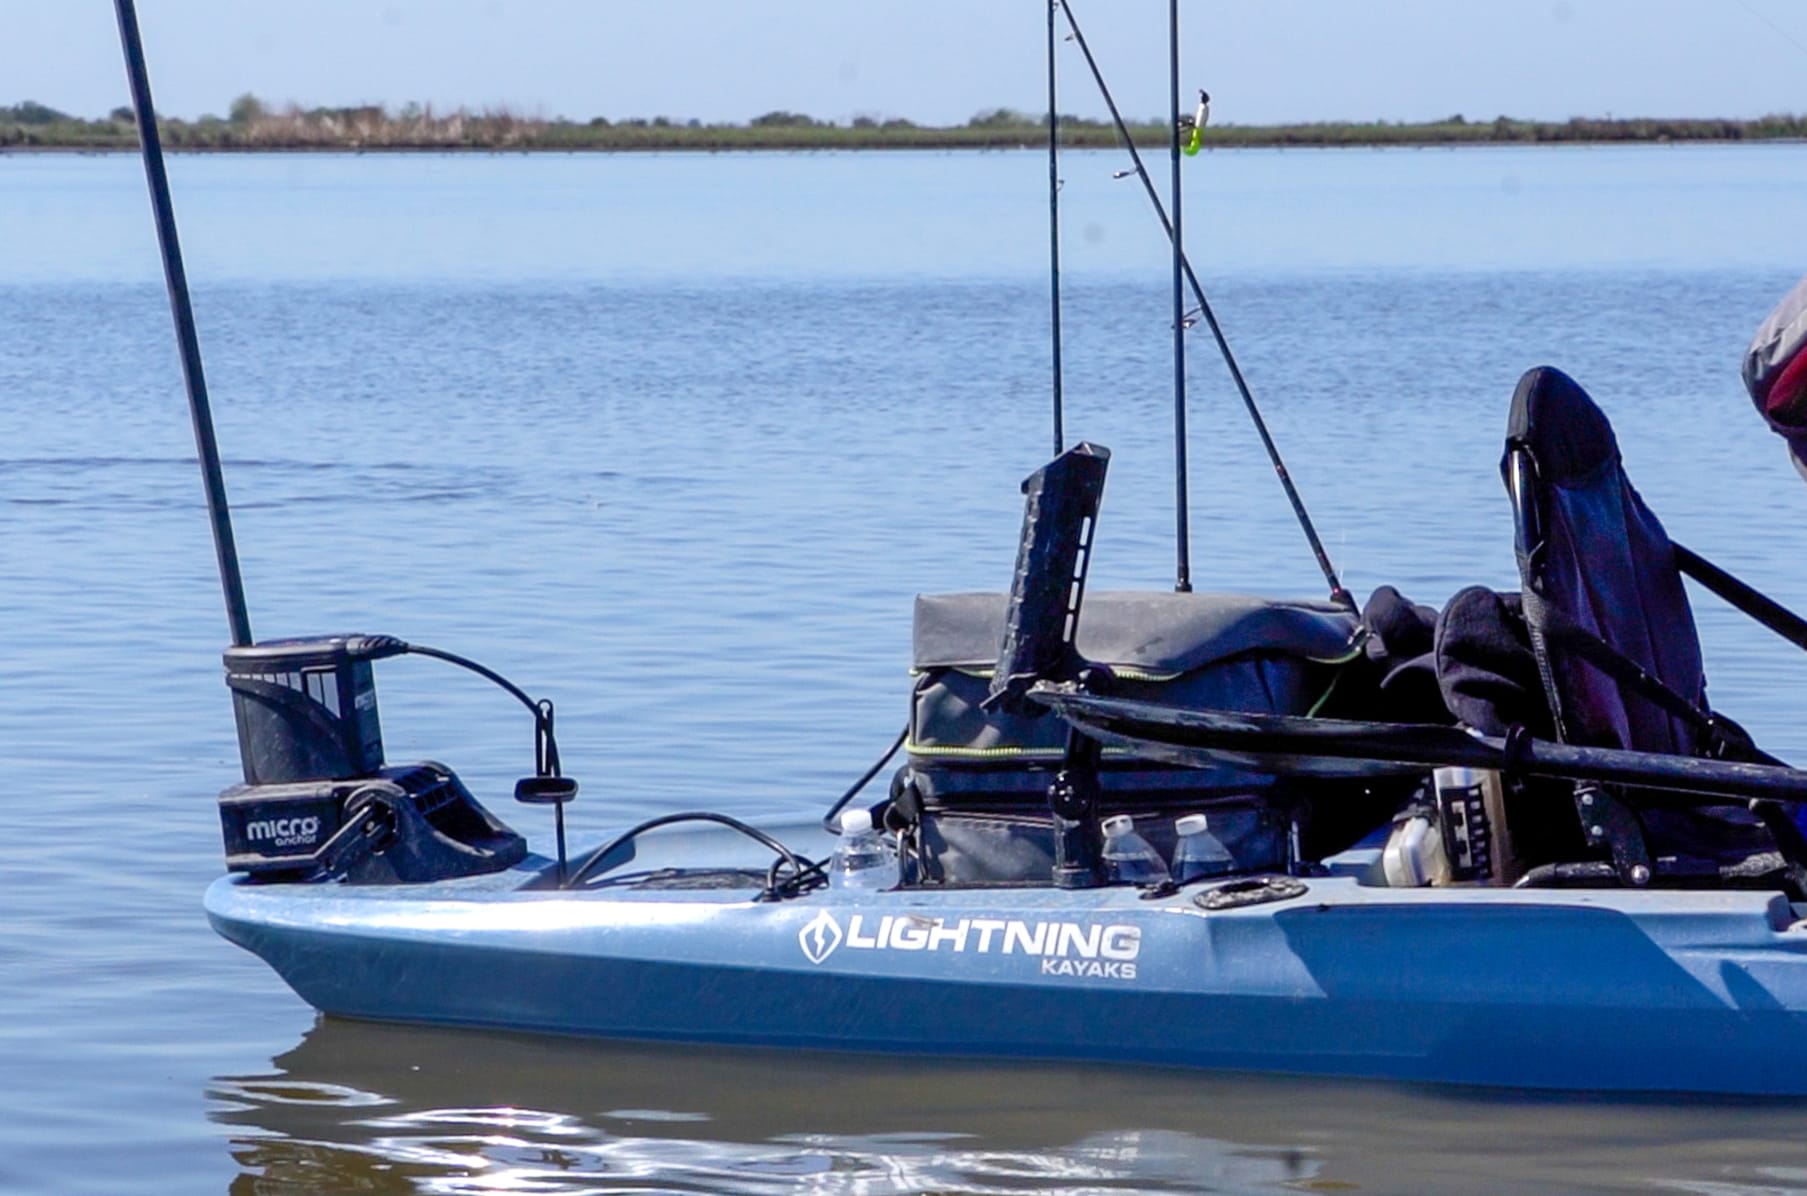 2023 Lightning Kayaks Nomad: A Step Up in Kayaks